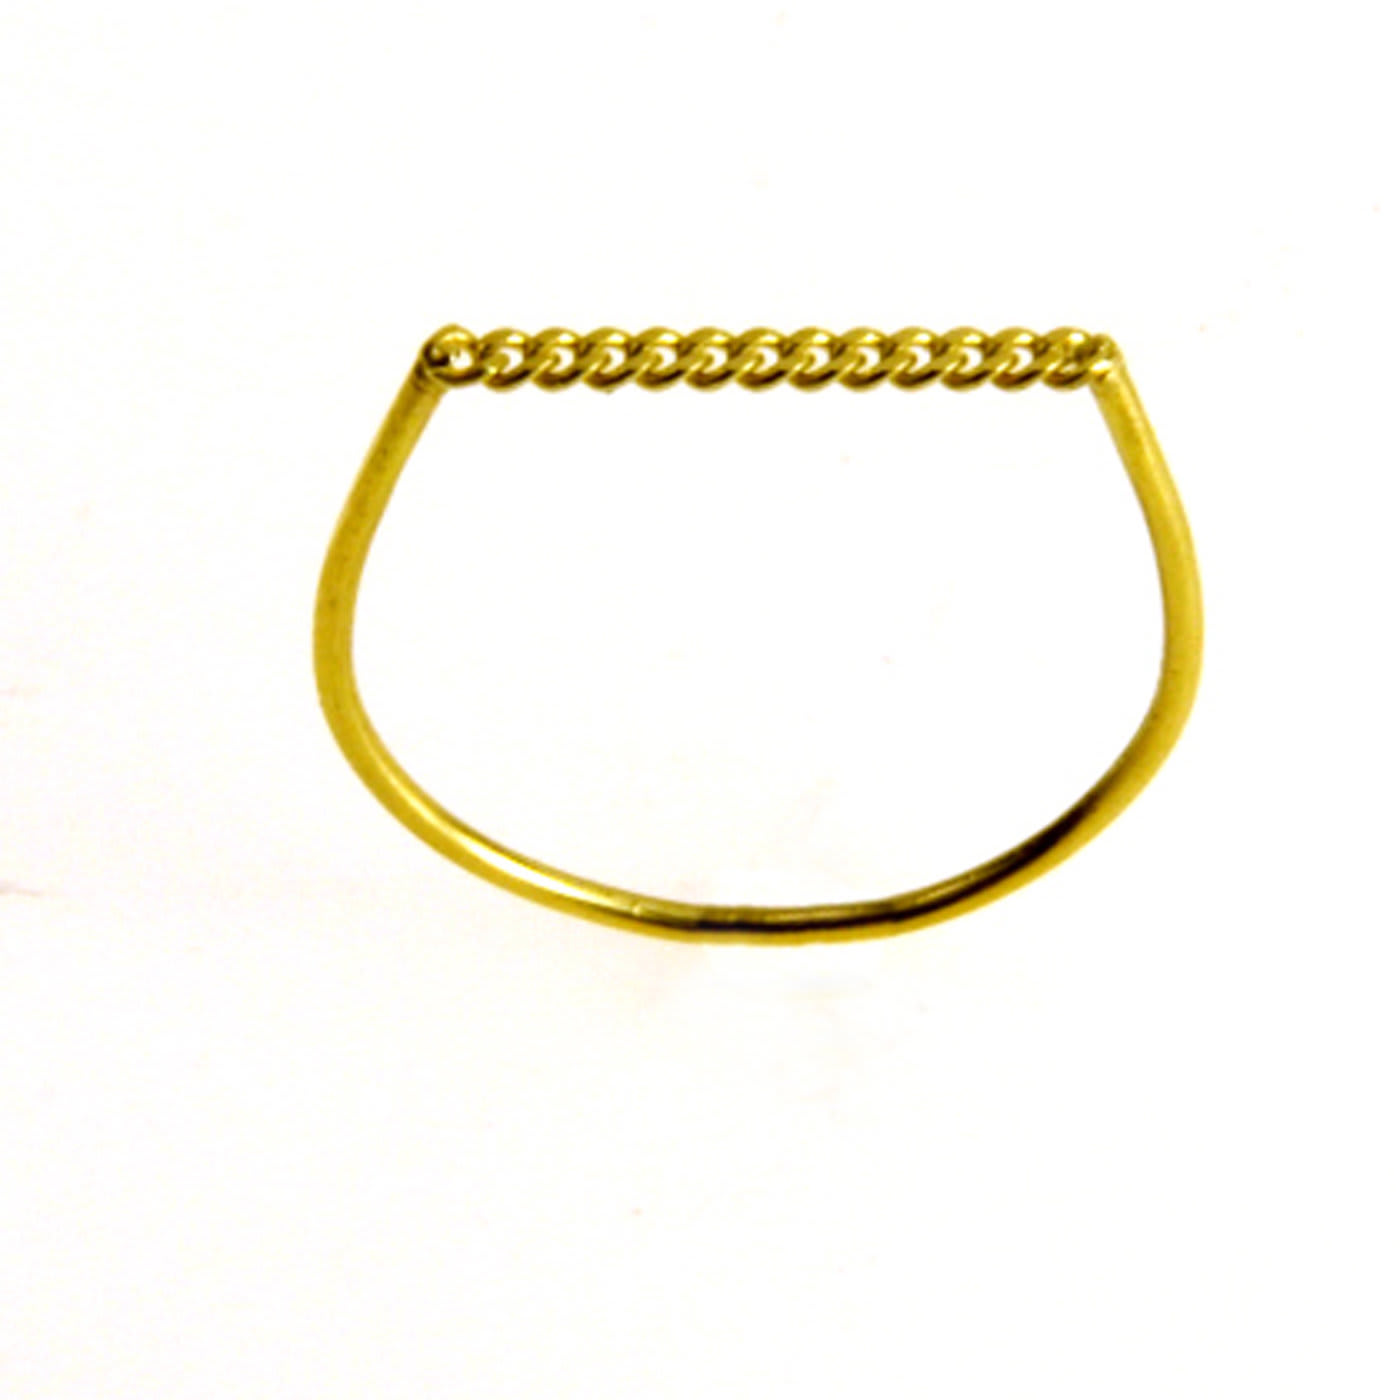 Groumette Chain Ring - Maitea